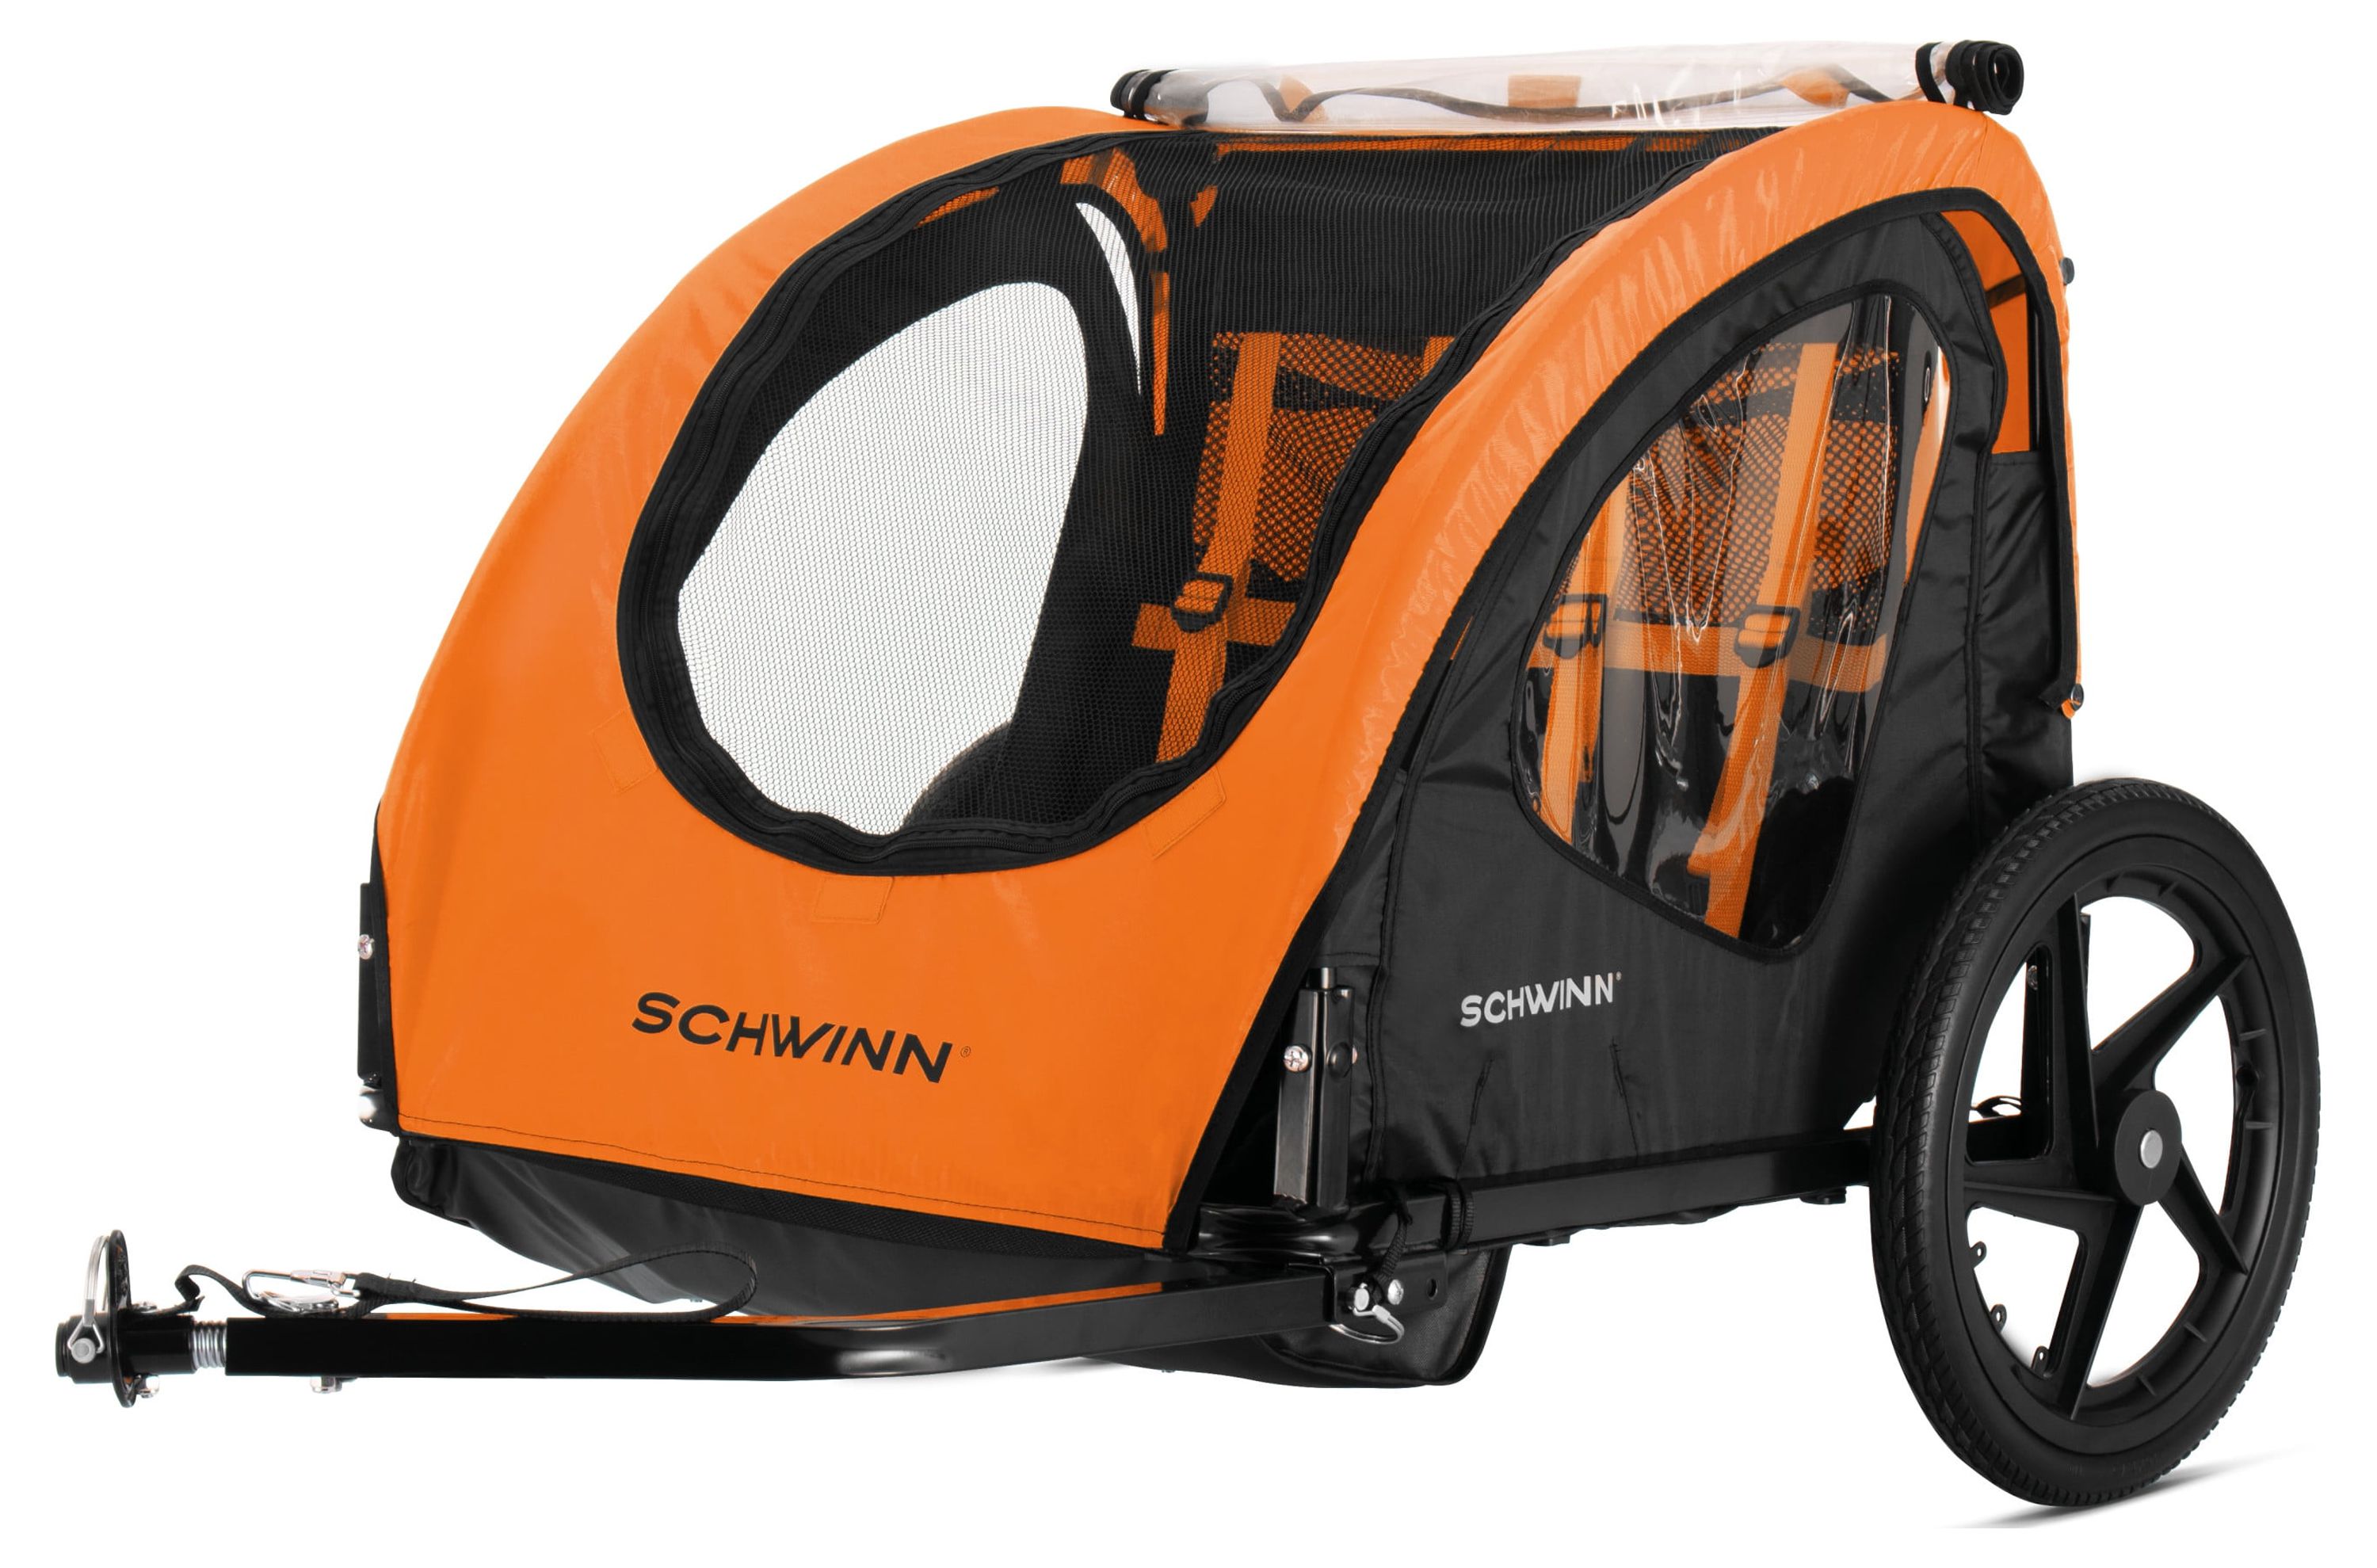 Schwinn Shuttle Foldable 2 Seat Child Bike Trailer, Orange & Black - image 1 of 8